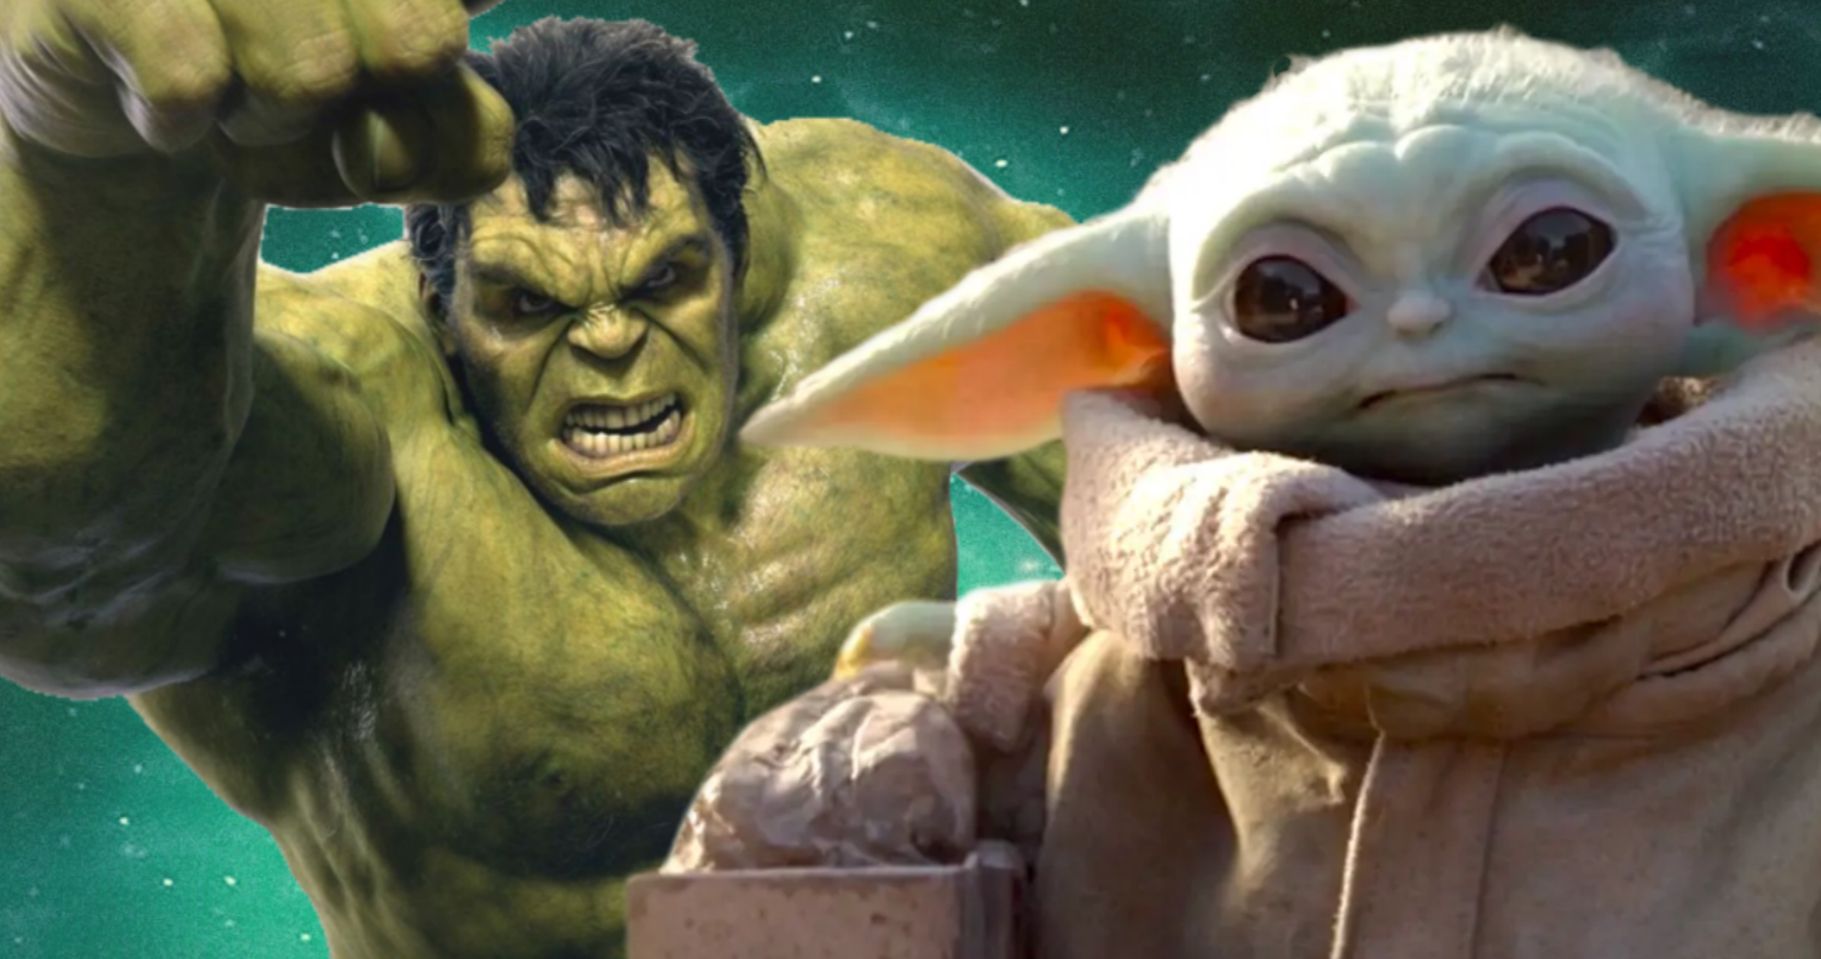 Baby Yoda's Head on Hulk's Body Is Incredibly Swole and Disturbing